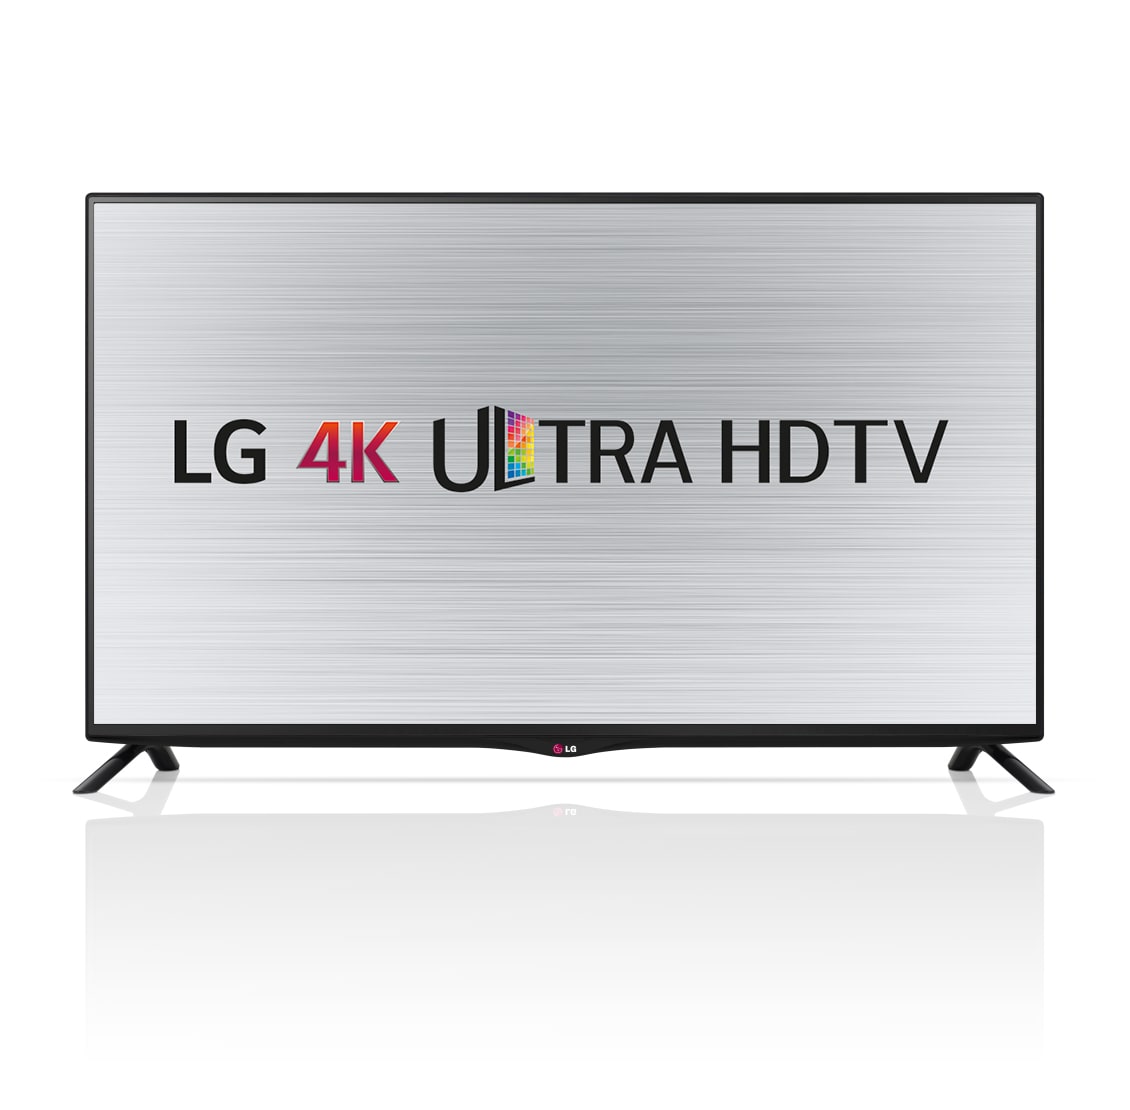 LG 40UB800V – TV ULTRA HD Smart TV avec écran de 101 cm (40 pouces)